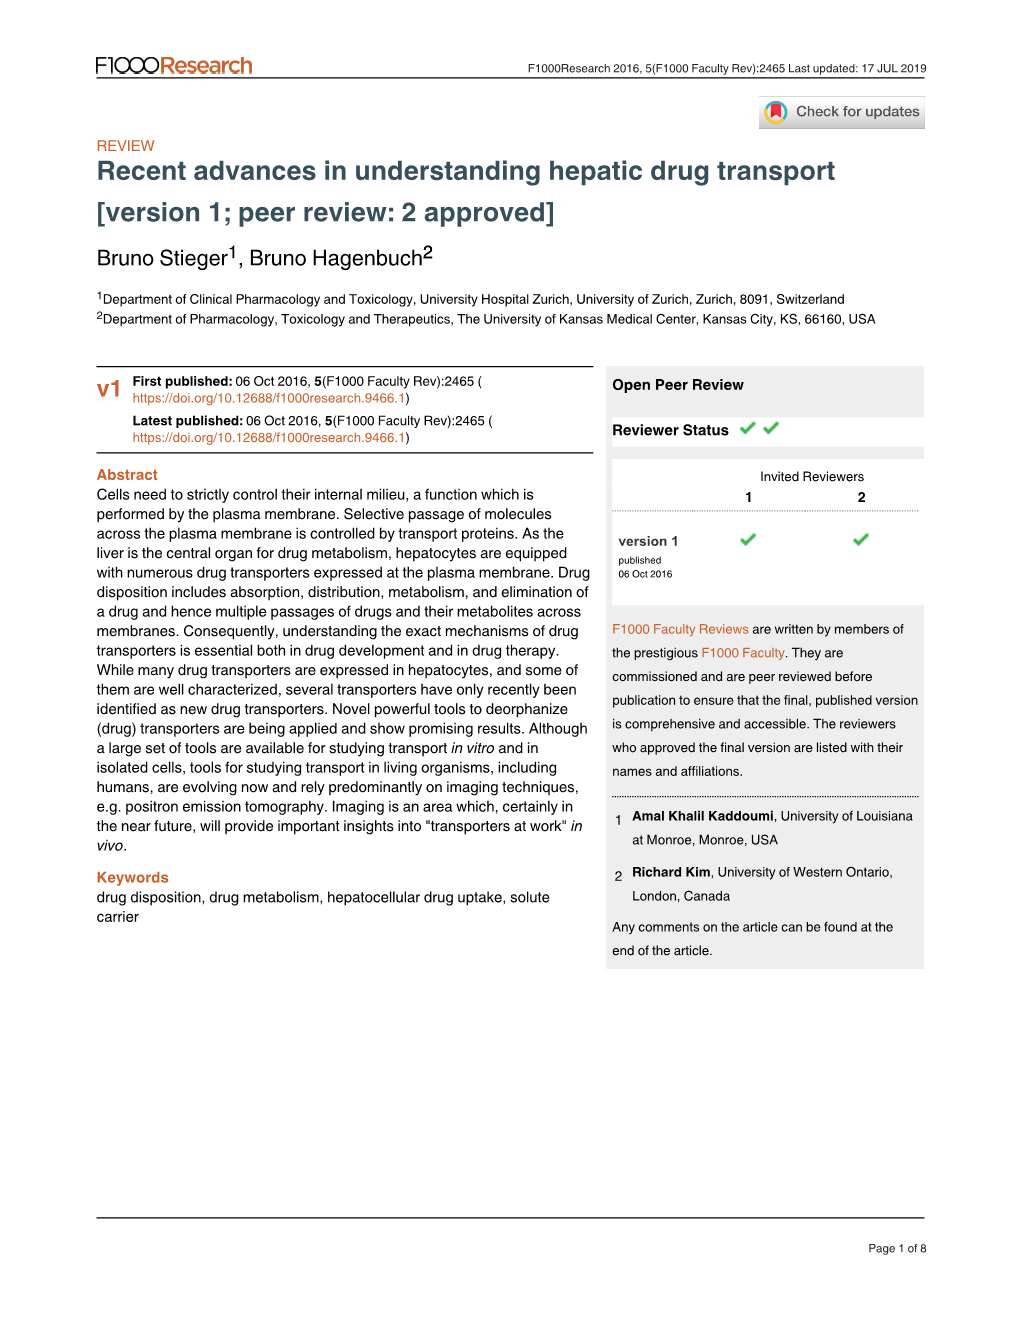 Recent Advances in Understanding Hepatic Drug Transport [Version 1; Peer Review: 2 Approved] Bruno Stieger1, Bruno Hagenbuch2